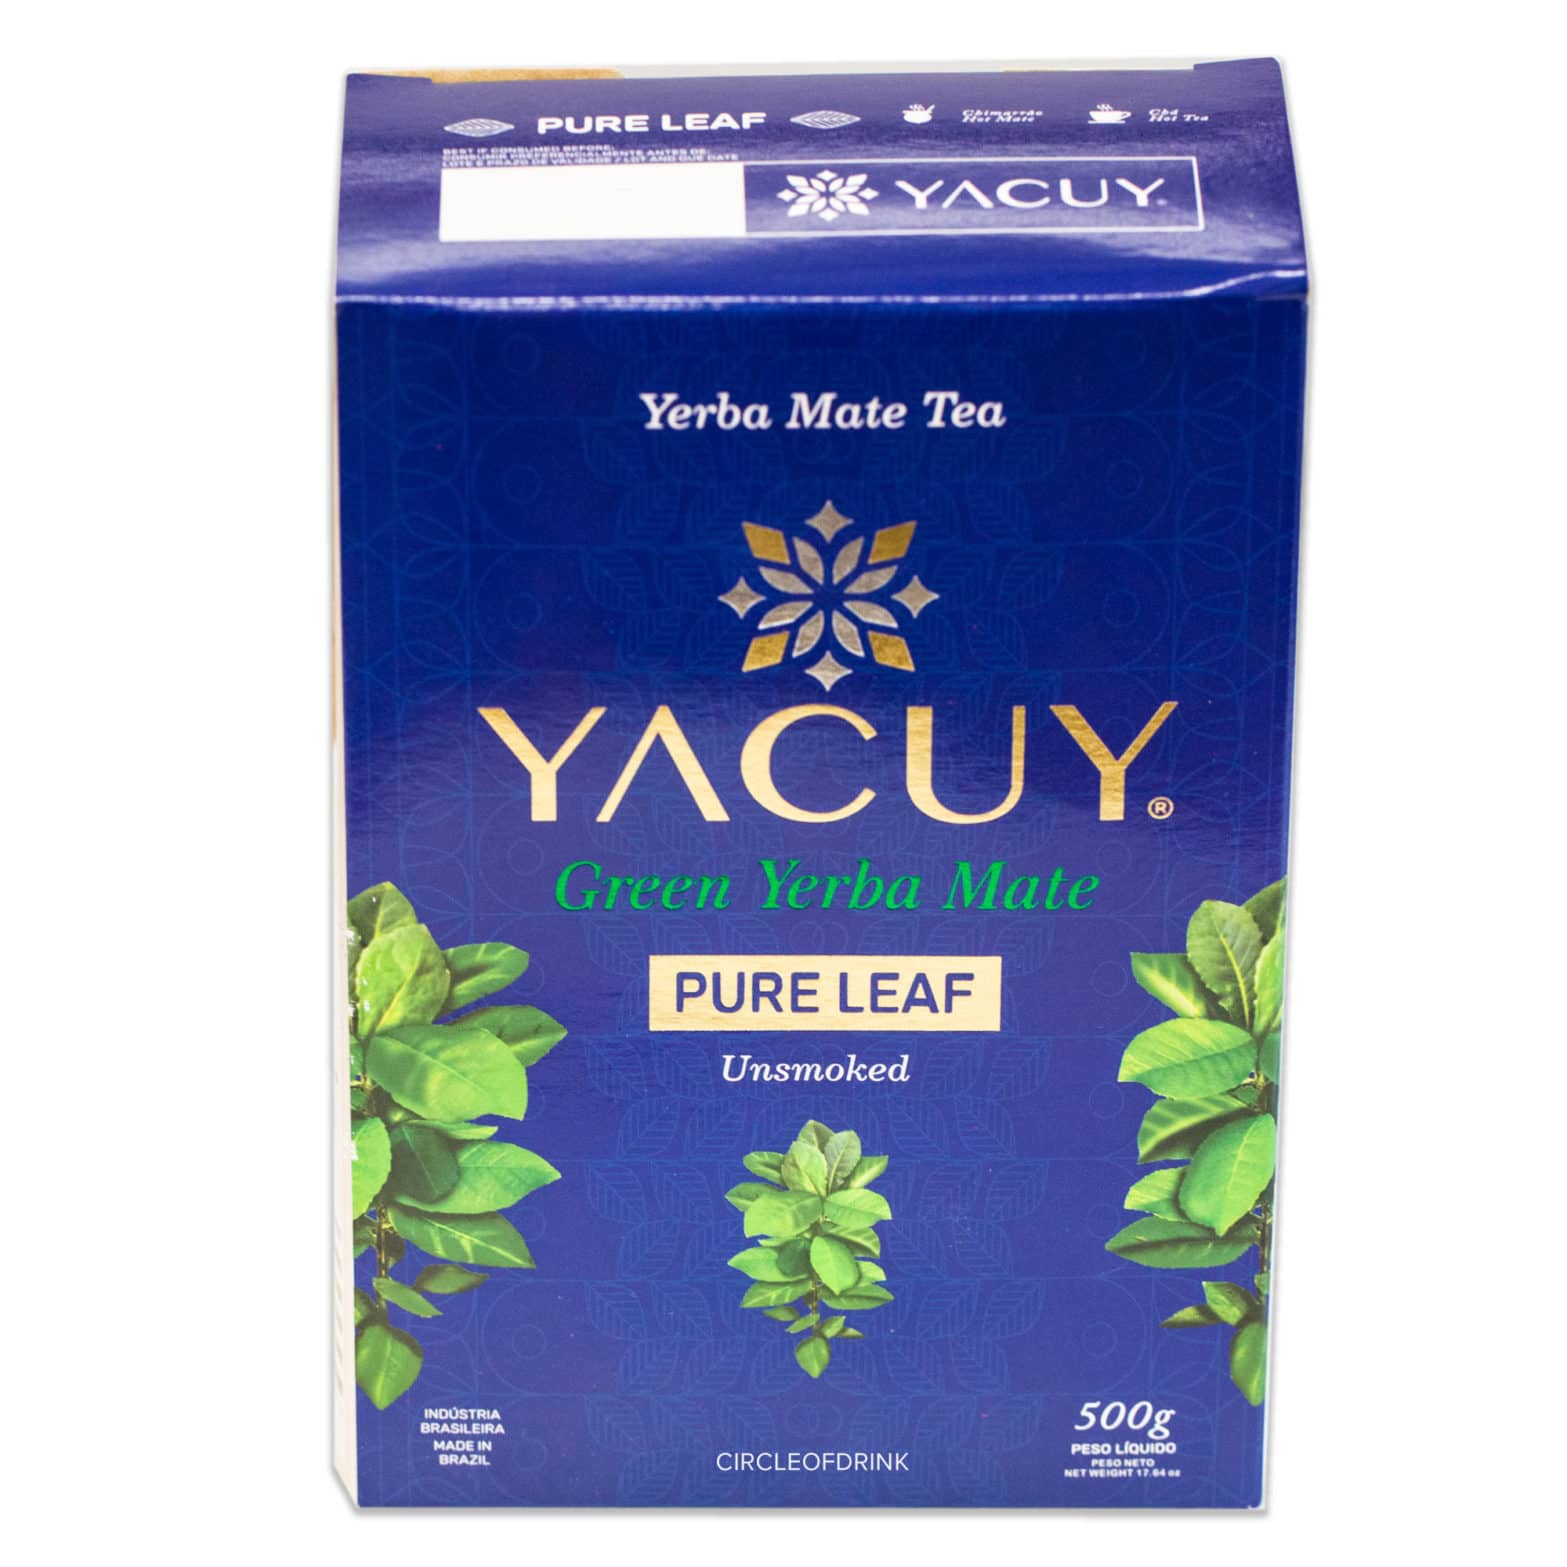 Yacuy Pure Leaf Unsmoked Yerba Mate – Vacuum Sealed -500g